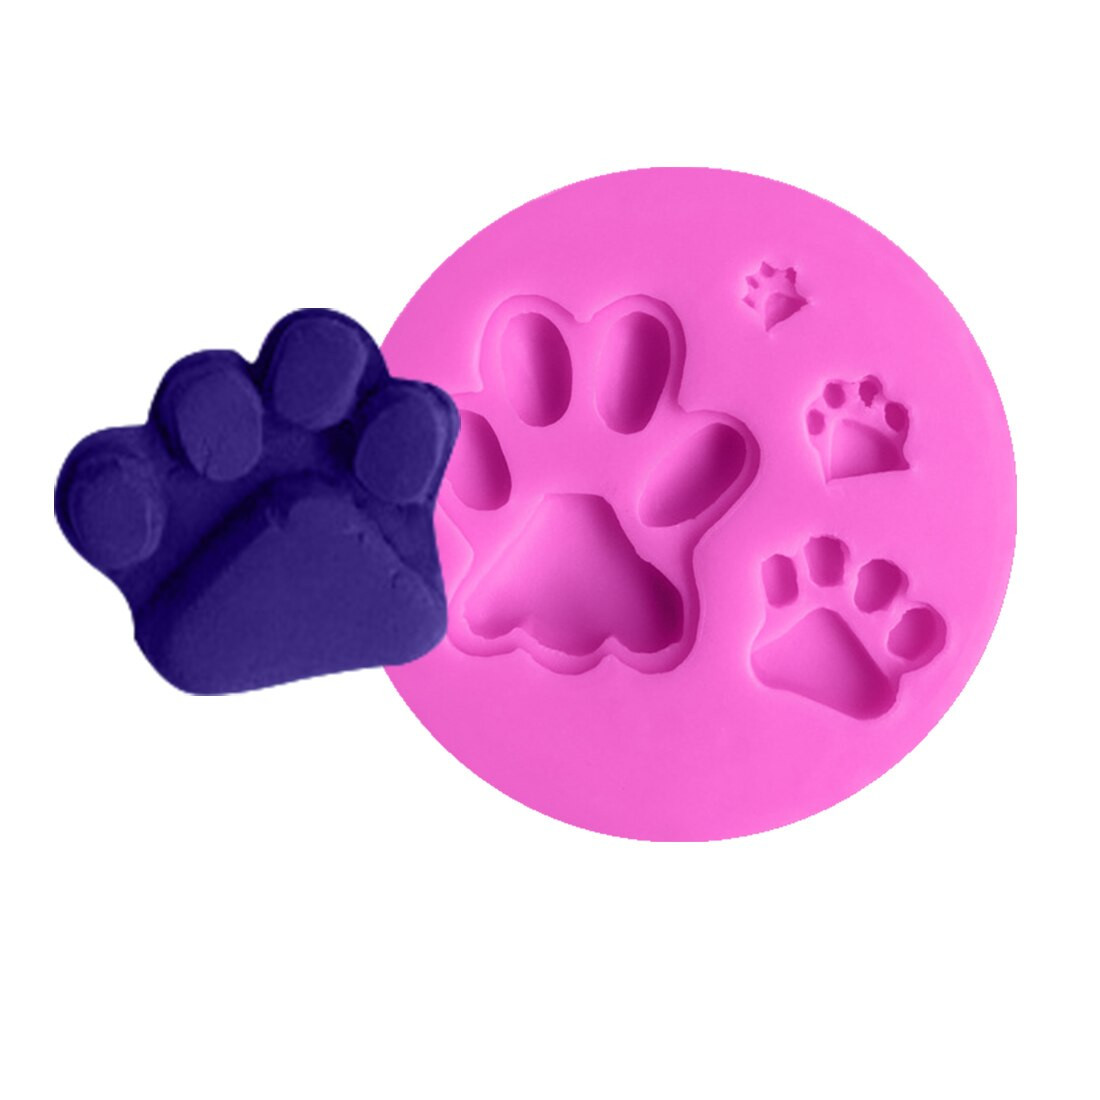 DIY Dog Paw Print Mold
 Aliexpress Buy 1PC DIY Cookie Cat Dog Paw Print